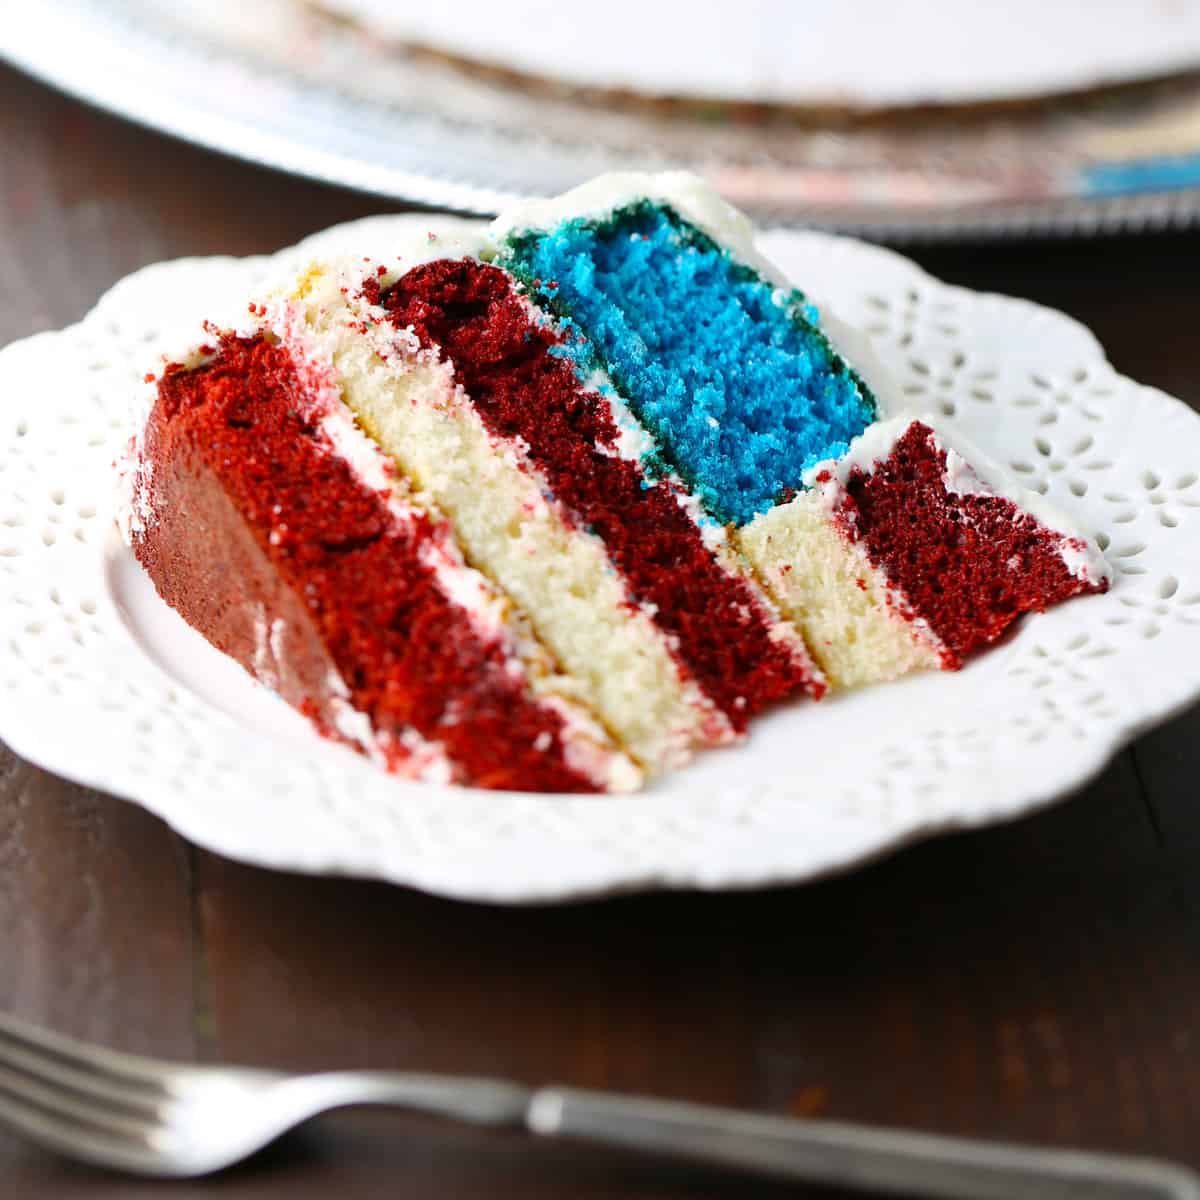 American flag surprise inside cake.